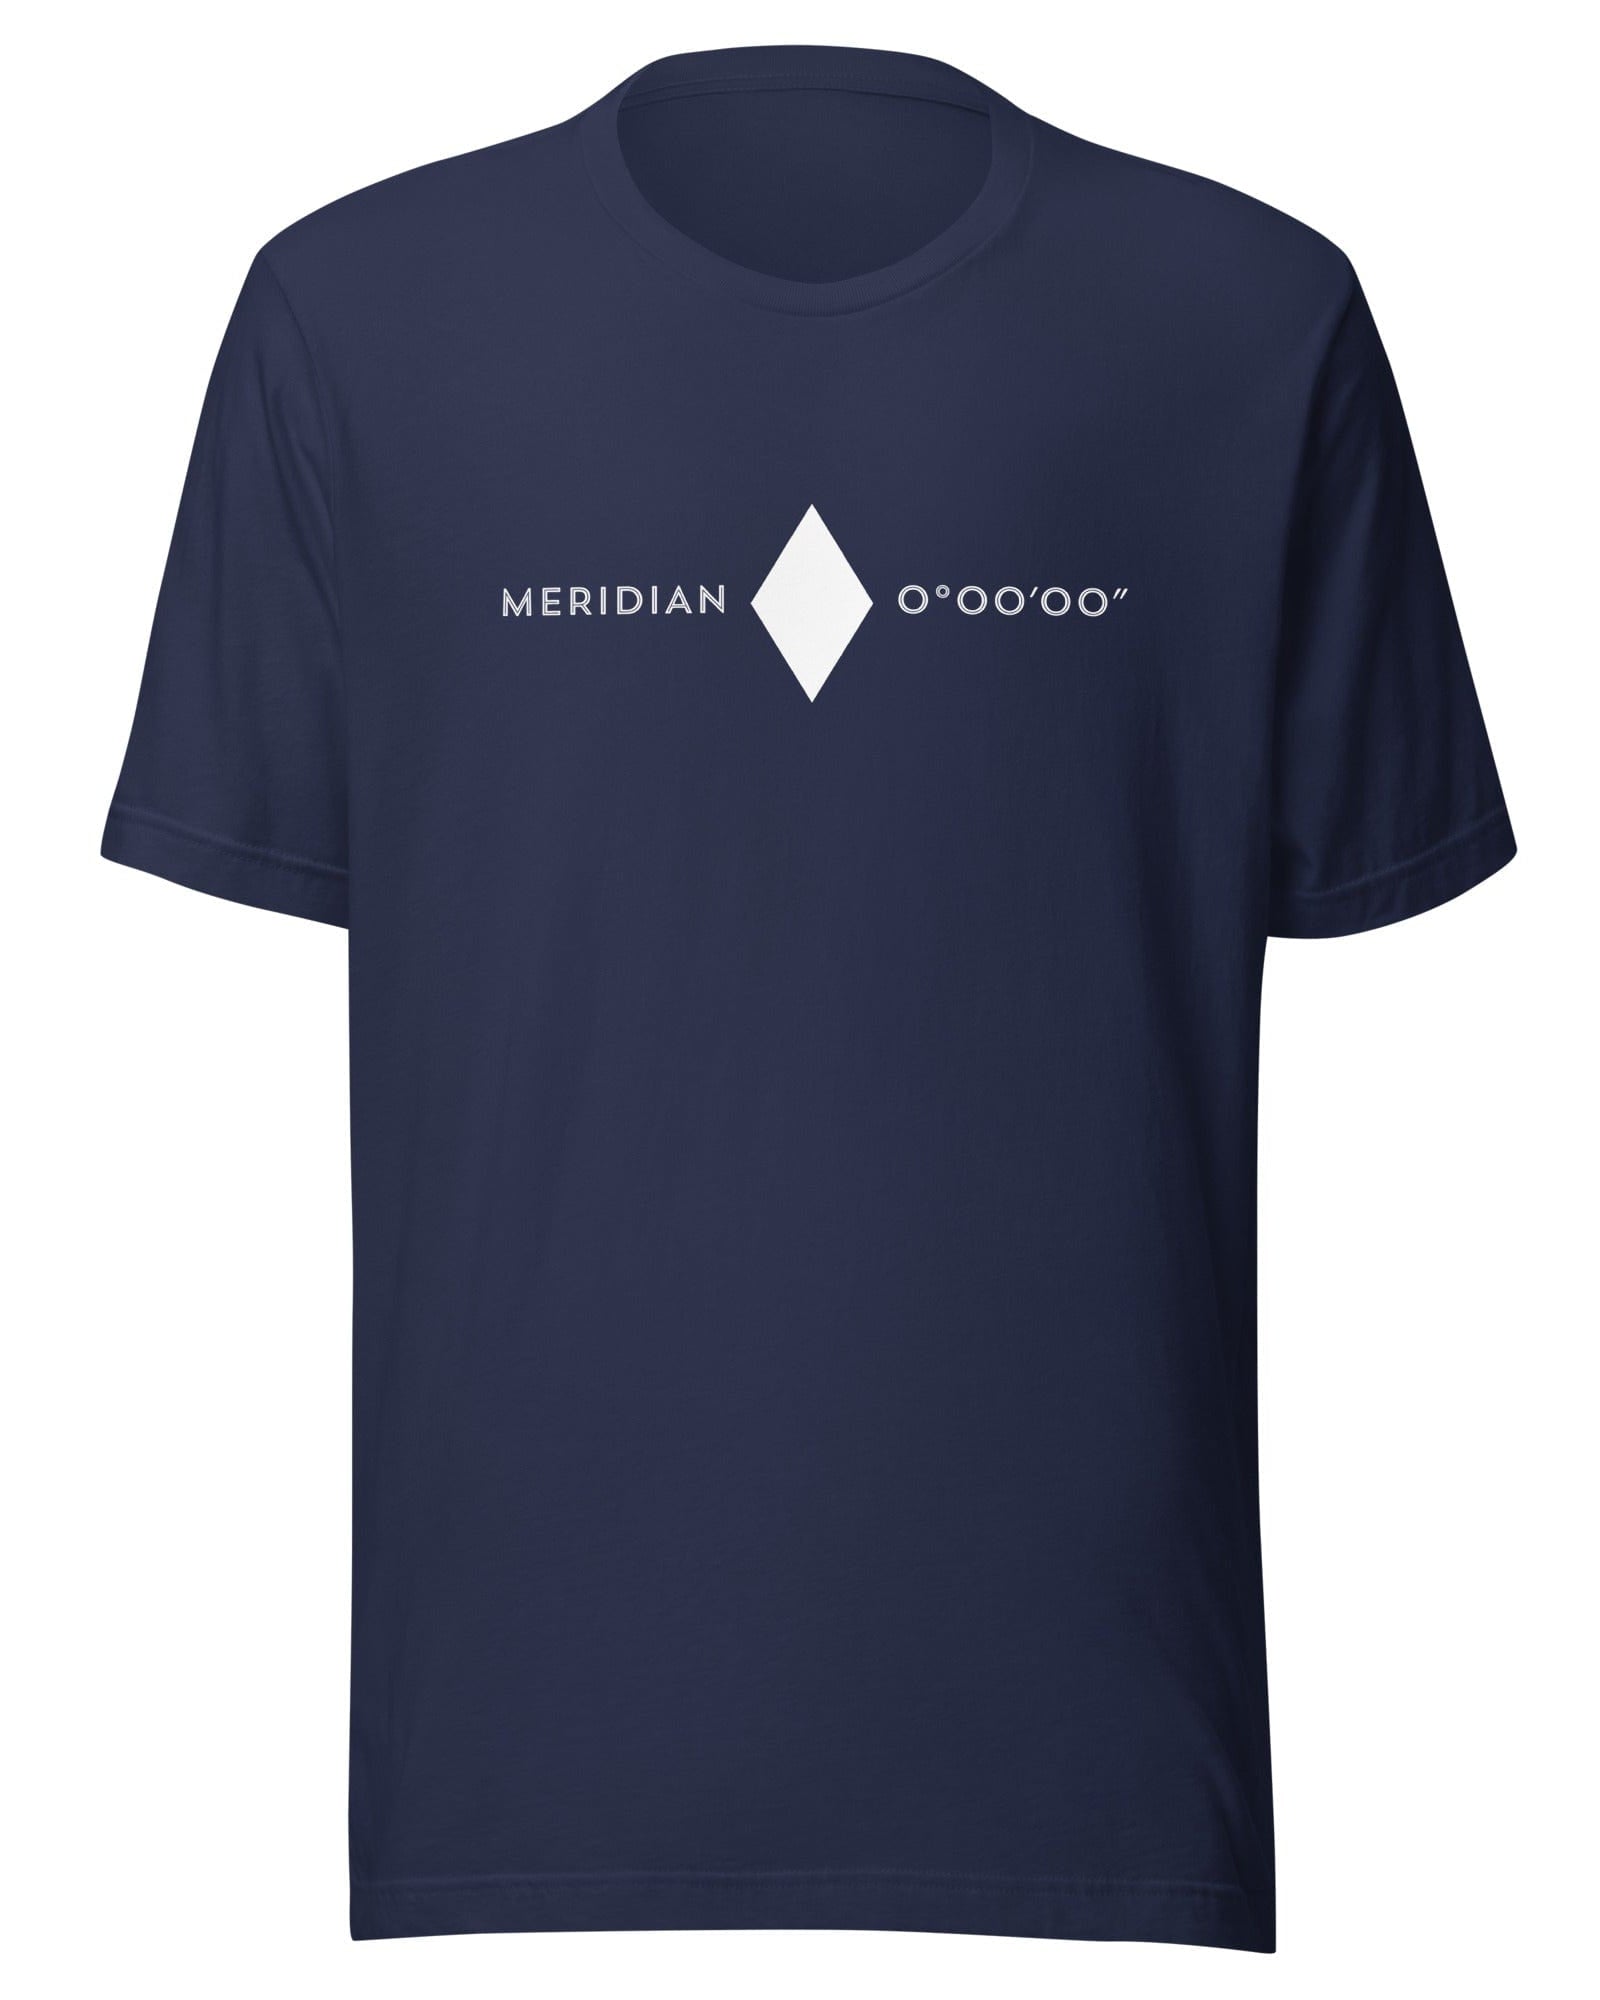 Meridian T-shirt | Greenwich Meridian Navy / S Shirts & Tops Jolly & Goode